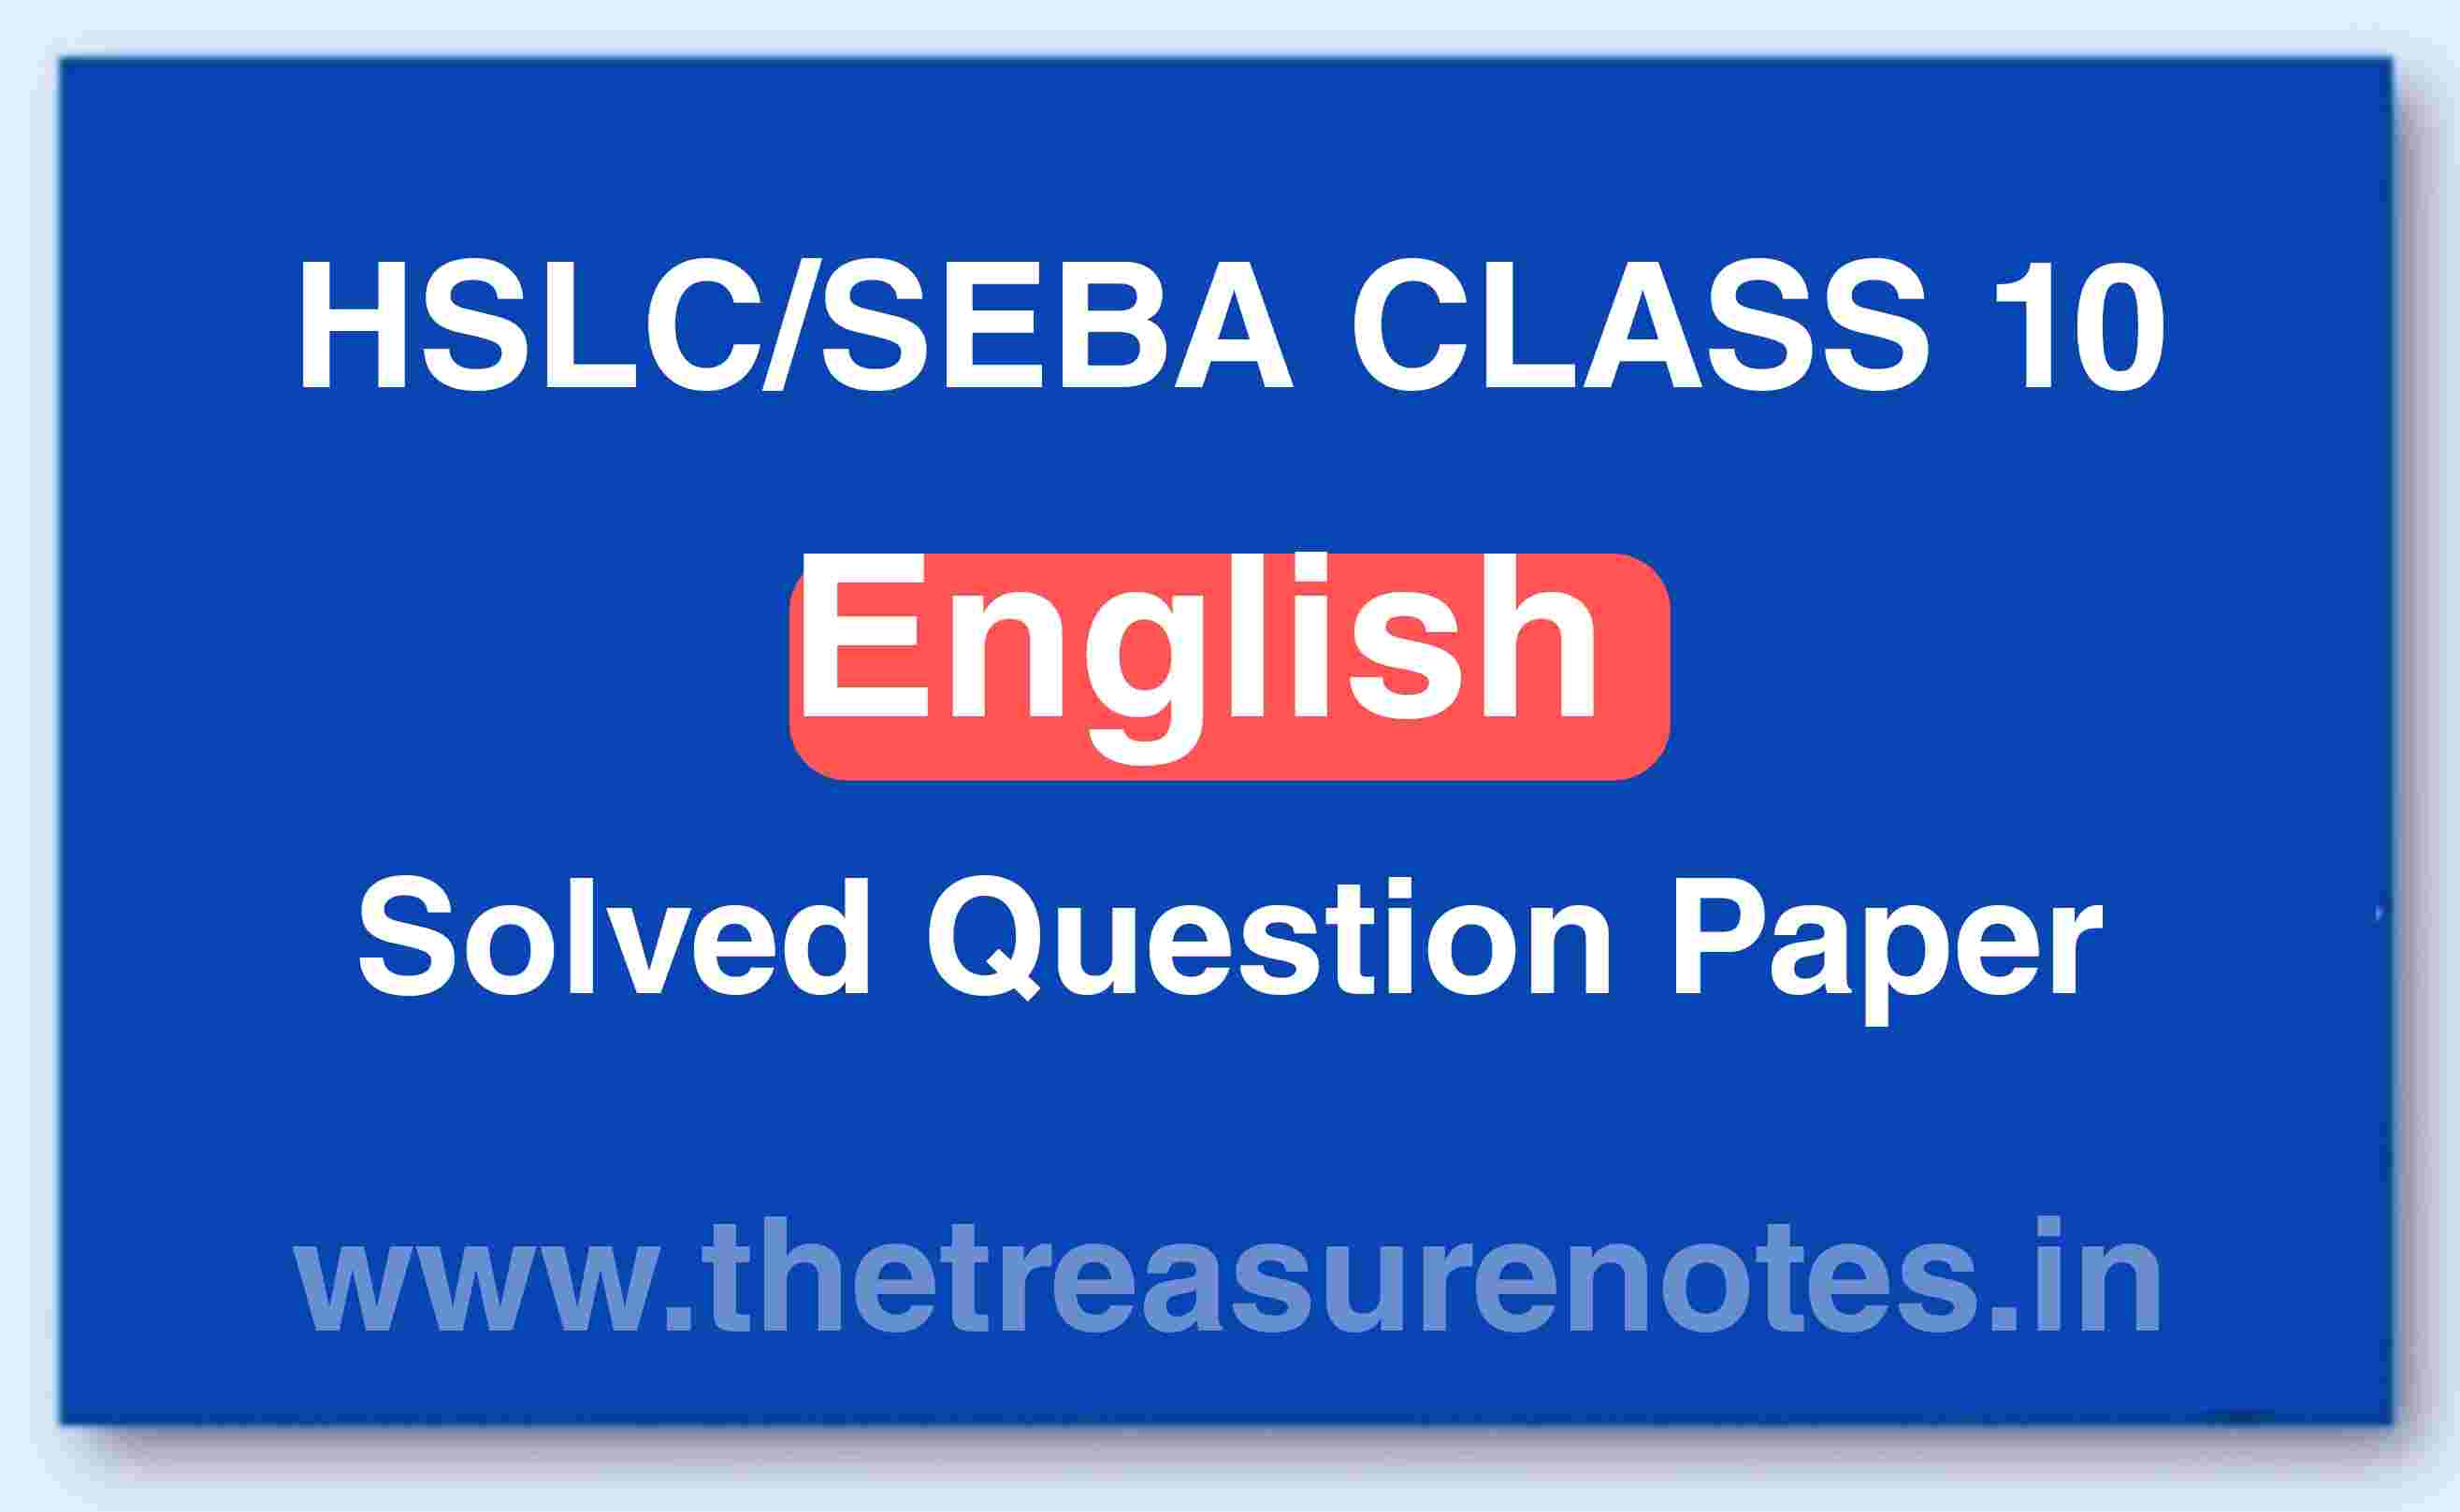 HSLC/SEBA Class 10 English Solved Question Paper 2019